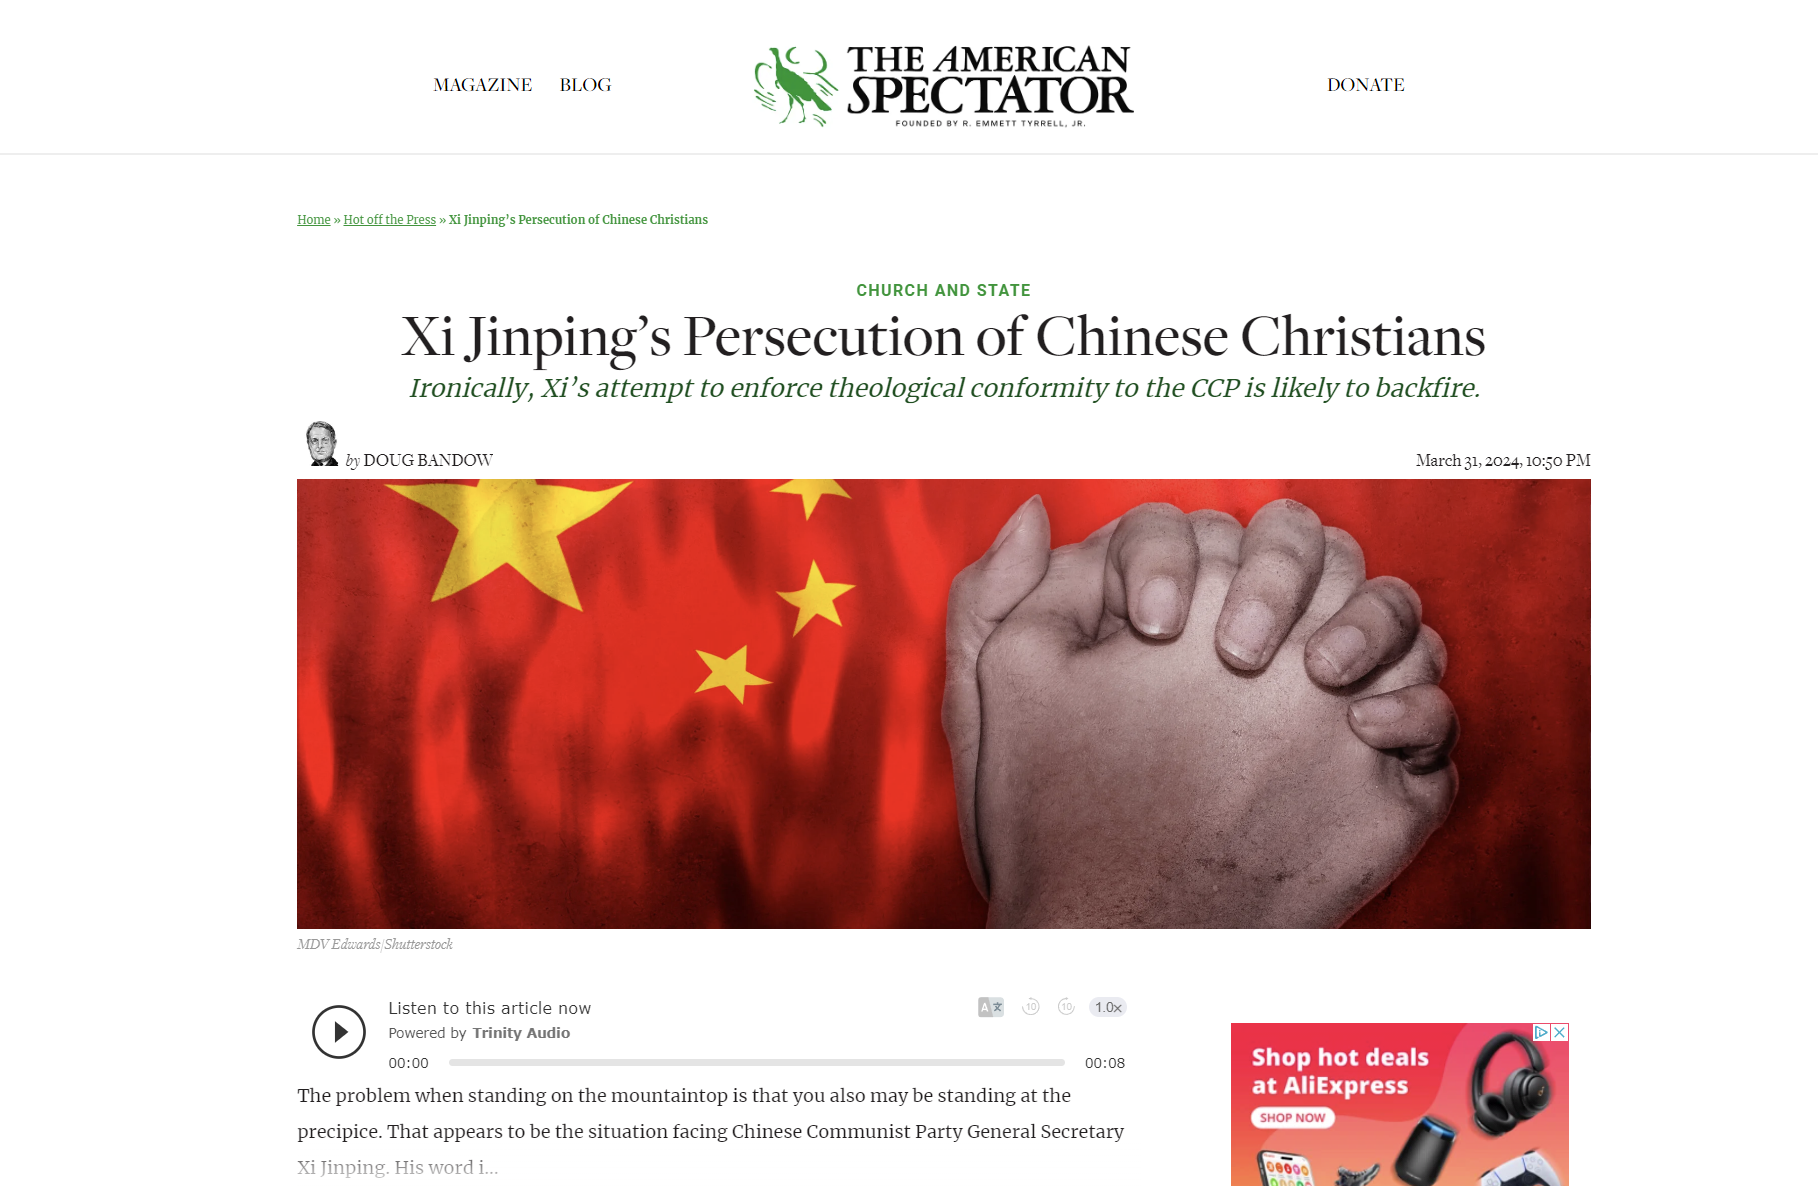 The American Spectator: Η δίωξη των Κινέζων Χριστιανών από τον Σι Τζιπίνγκ